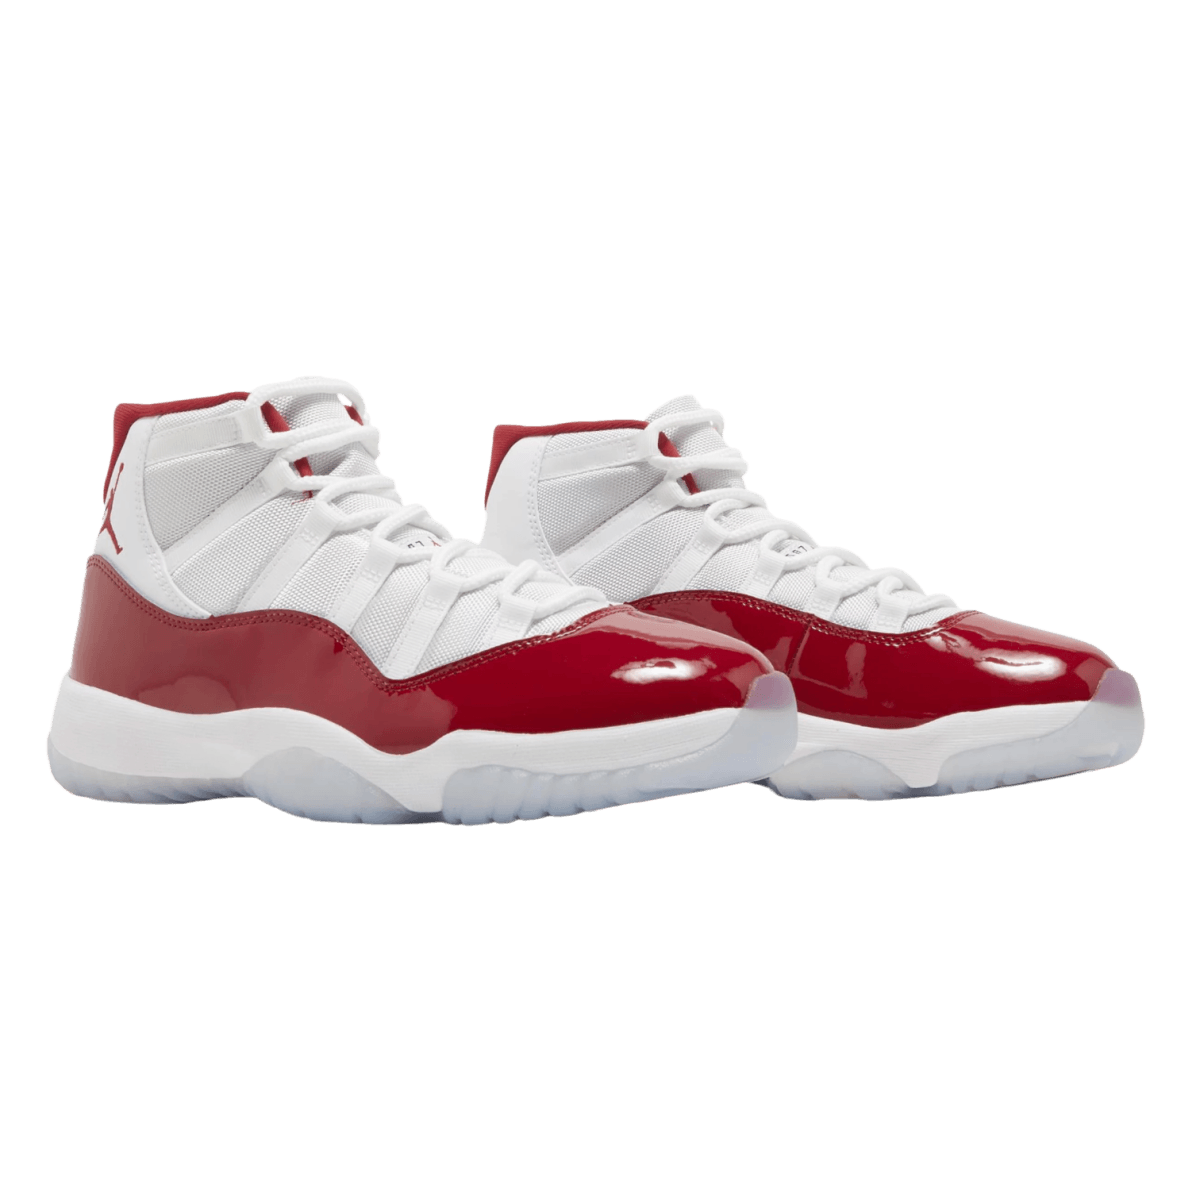 Air Jordan 11 Retro 'Cherry' - High Sneaker - Jawns on Fire Sneakers & Streetwear